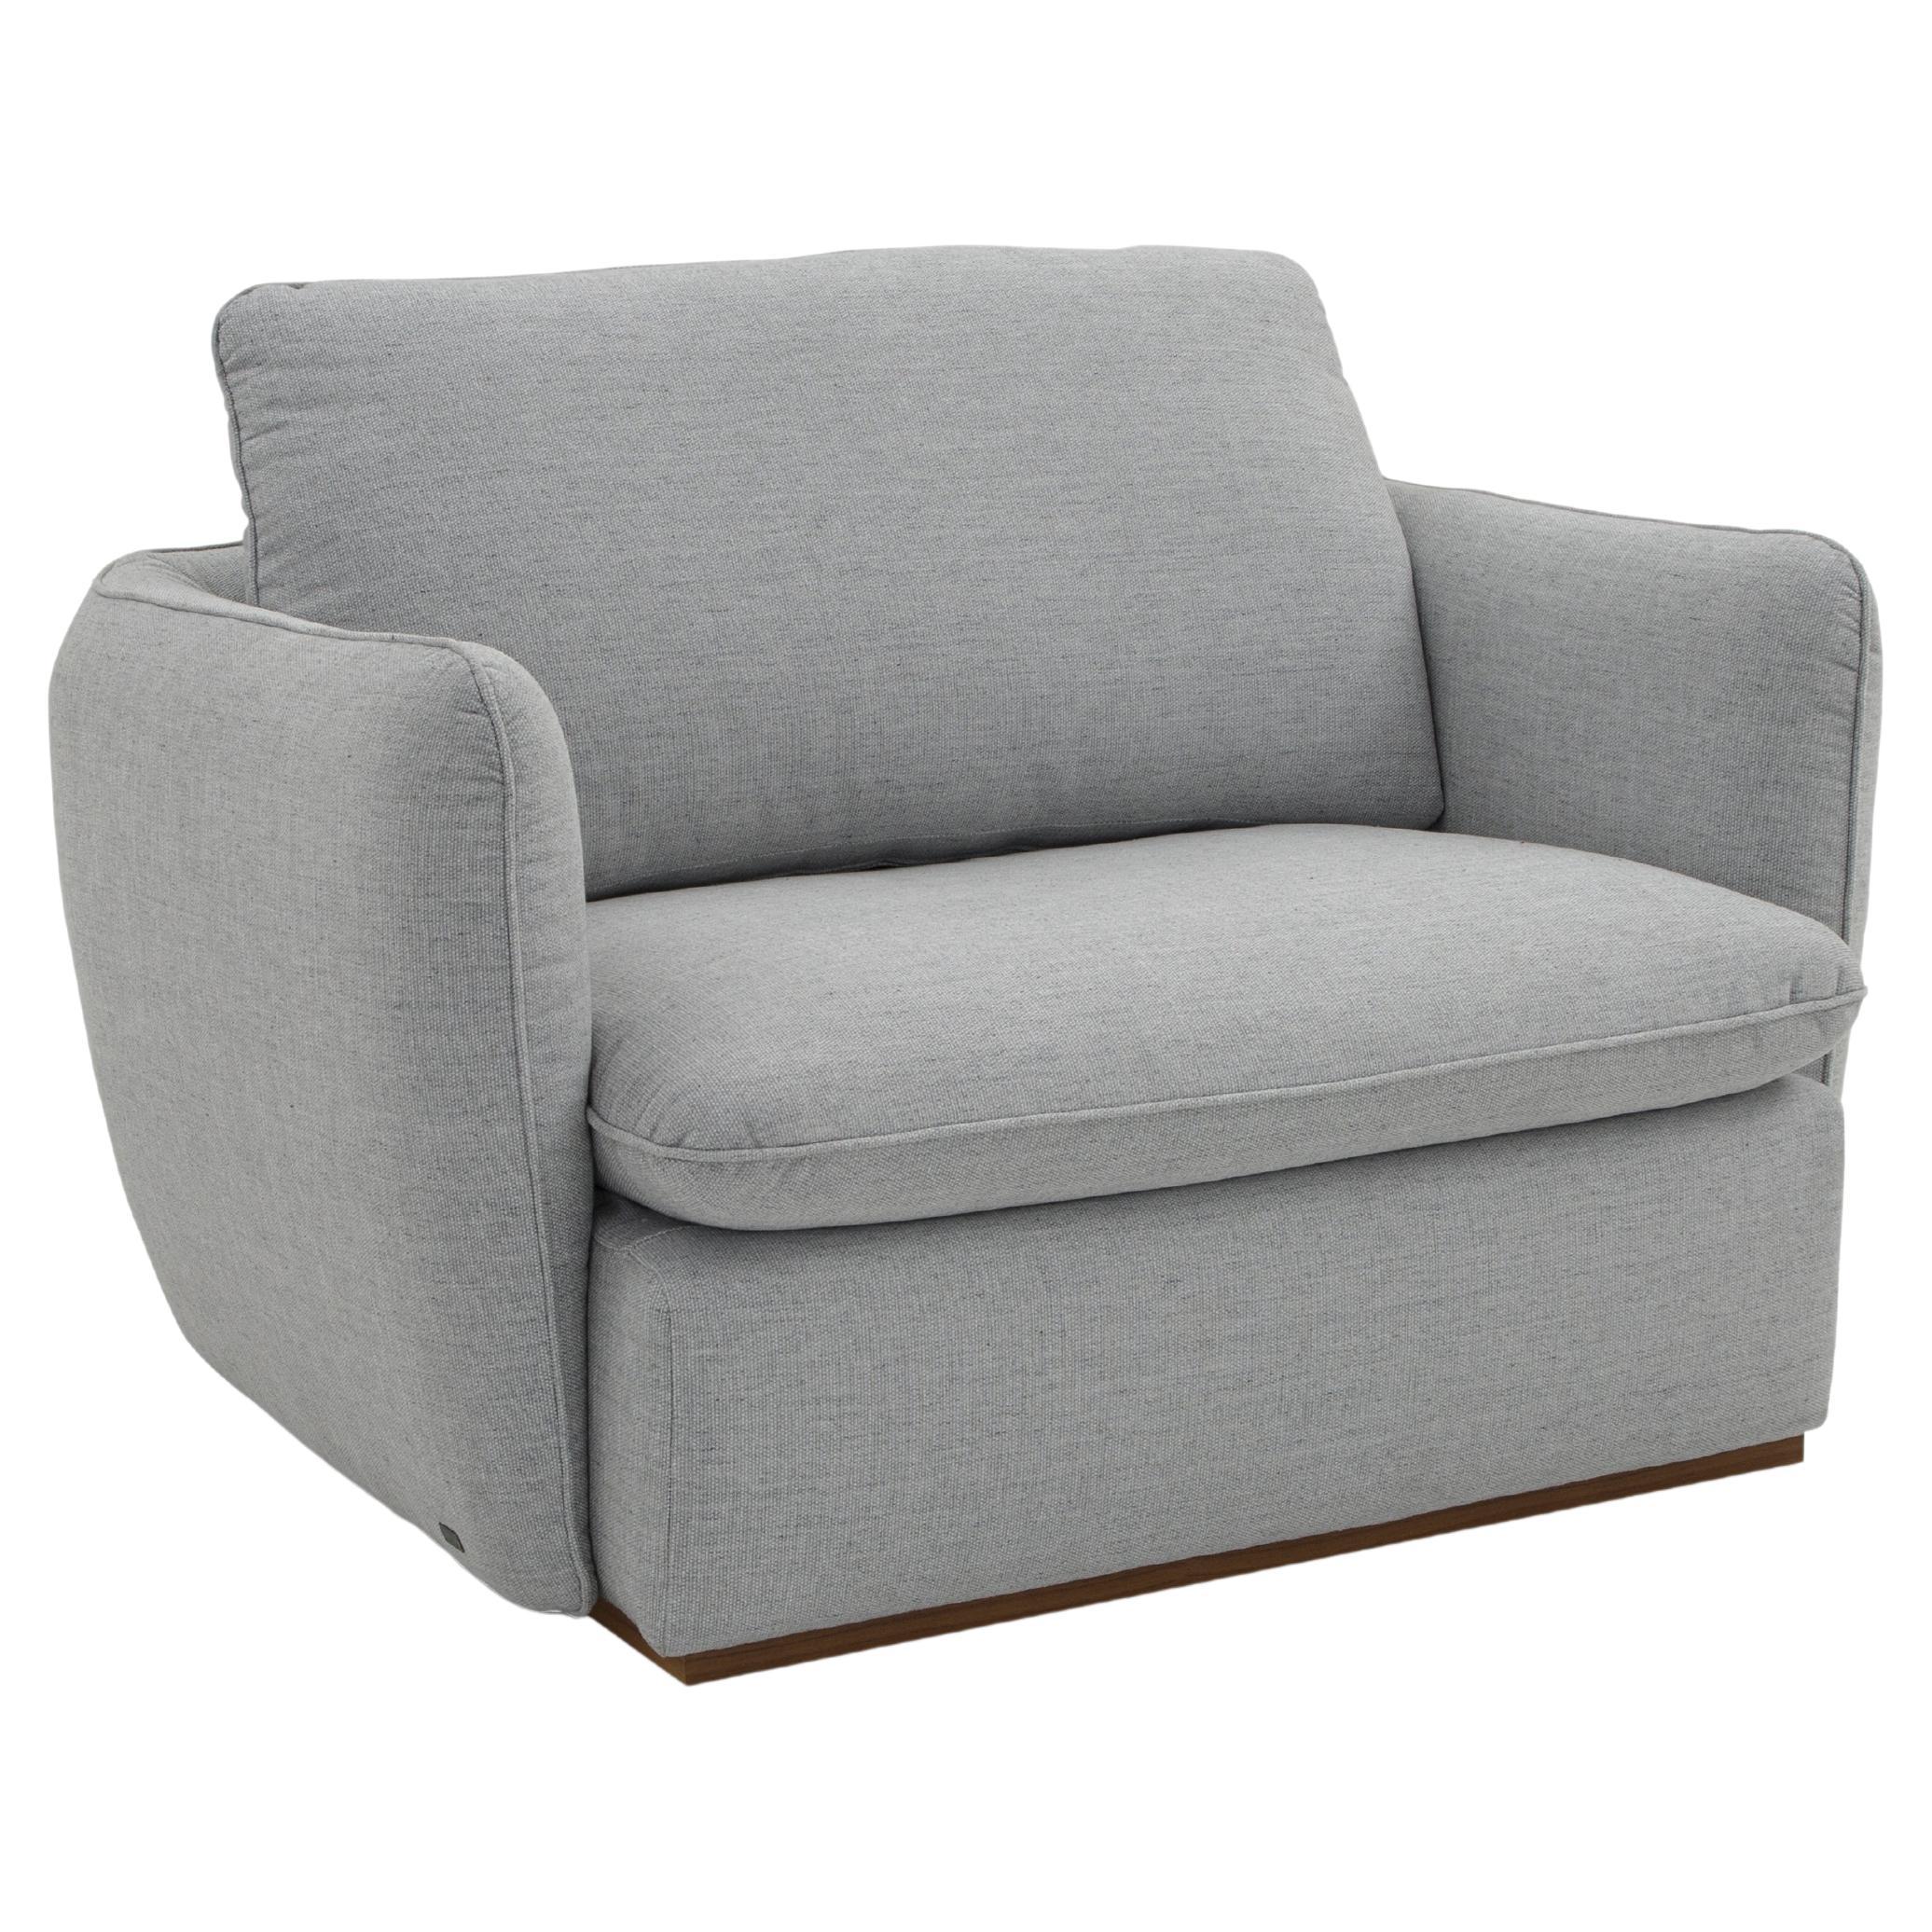 Kolo Armchair Upholstered in Light Gray Fabric